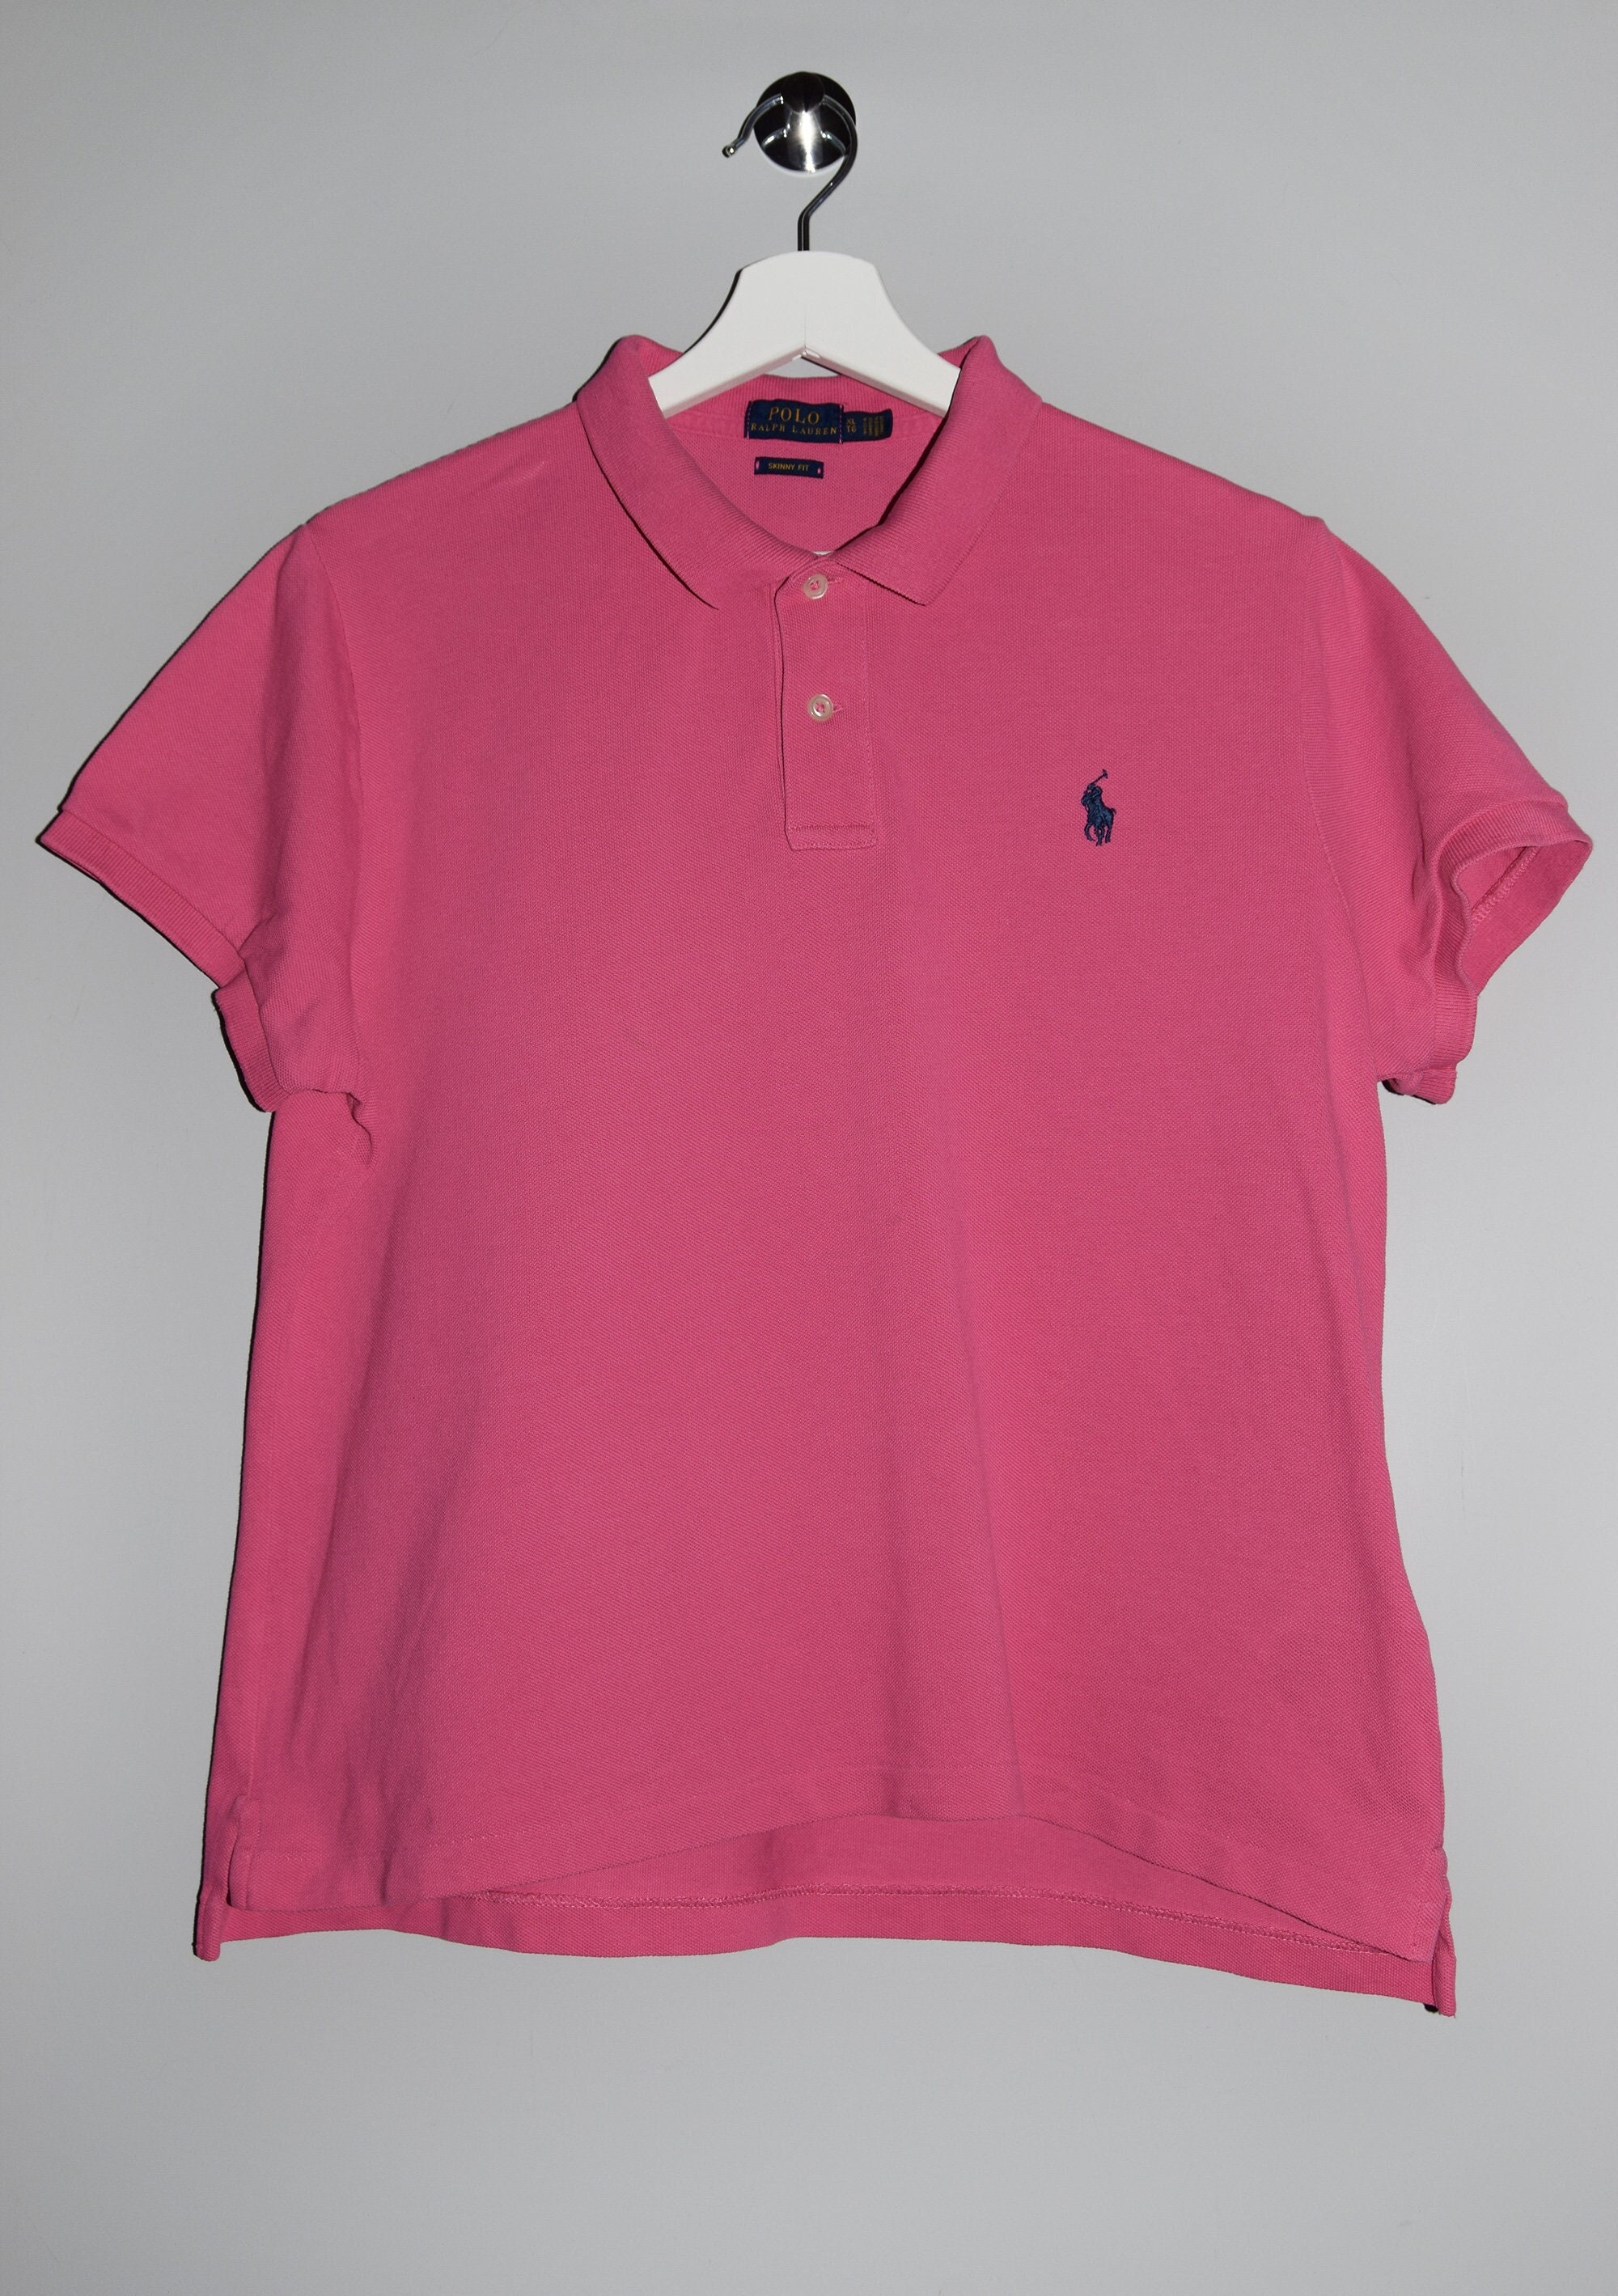 Ralph Lauren Polo Shirt Two Button Collared Pink T-shirt Casual Sportswear  Polo Shirt Streetwear Fashion Tee Retro Casual Style 